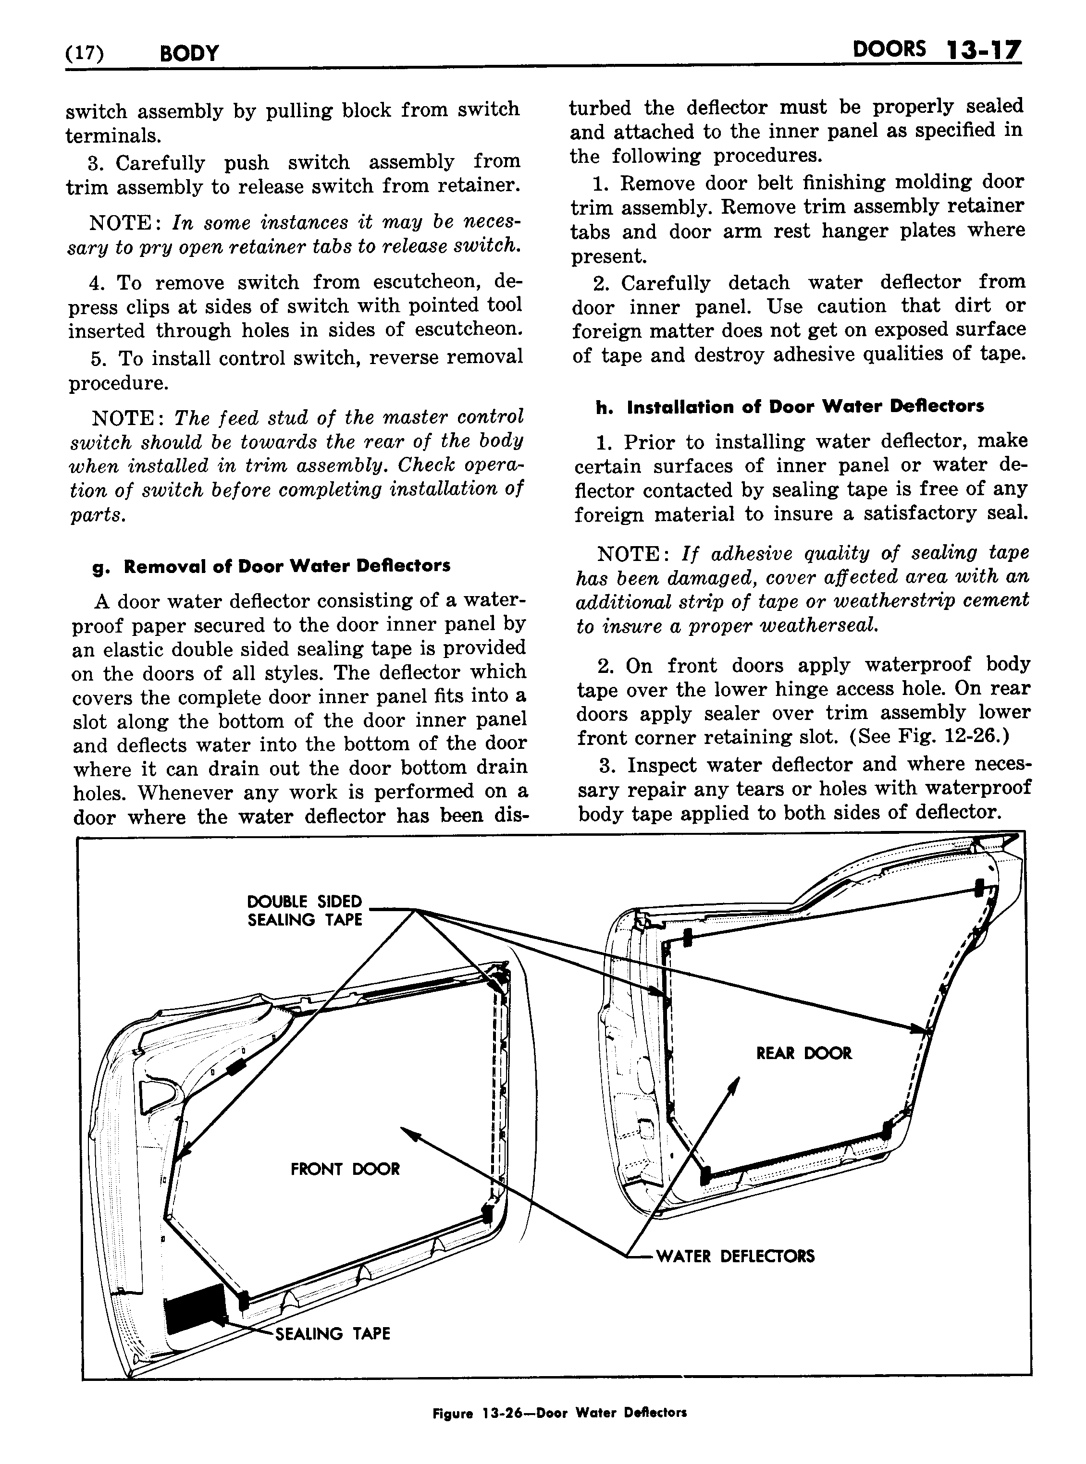 n_1957 Buick Body Service Manual-019-019.jpg